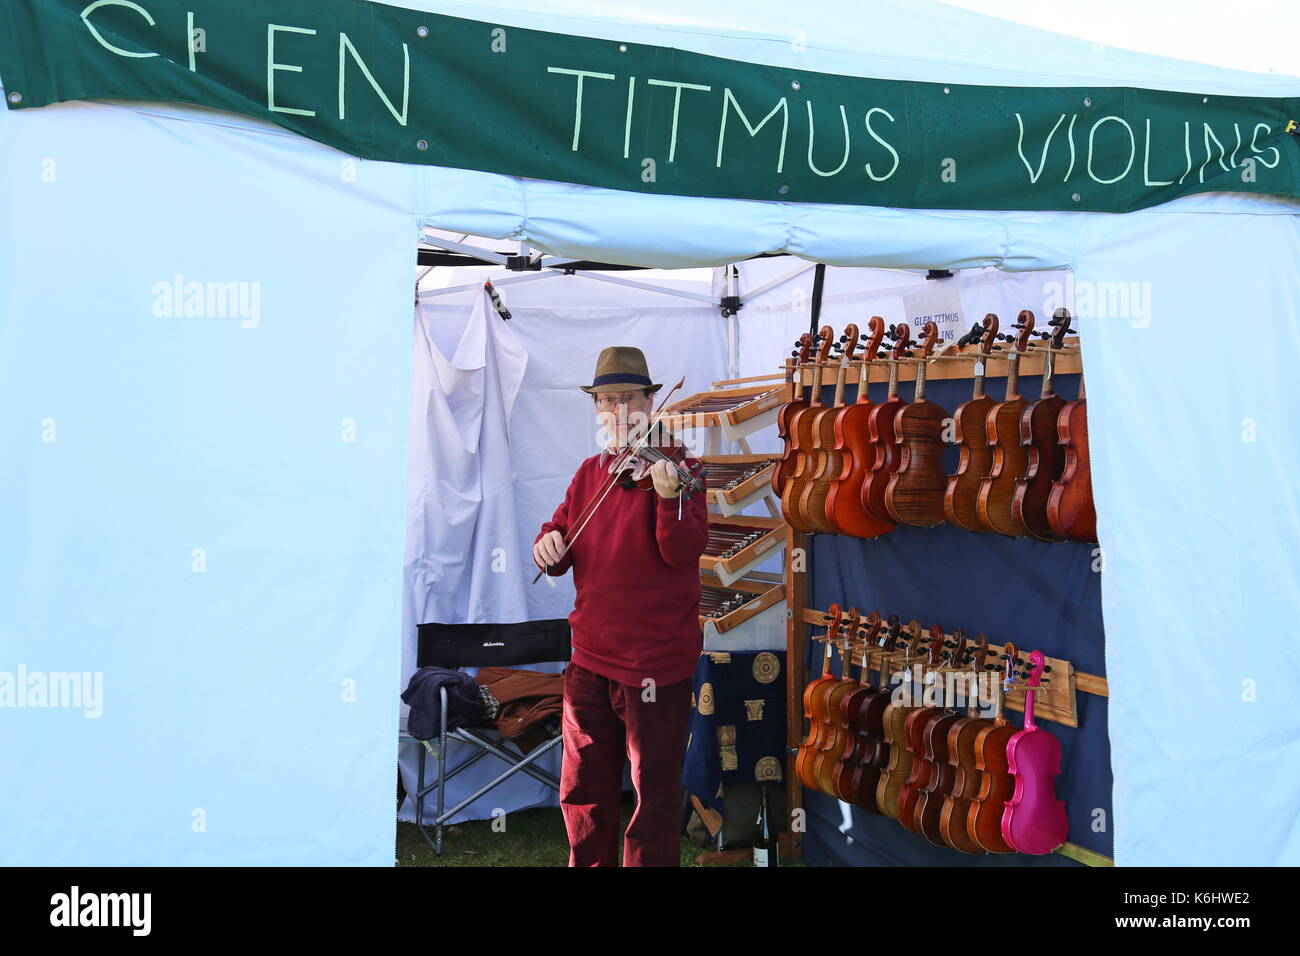 Glen Titmus Violins, Sandpit Field, Swanage Folk Festival 2017, Isle of Purbeck, Dorset, England, Great Britain, United Kingdom, UK, Europe Stock Photo